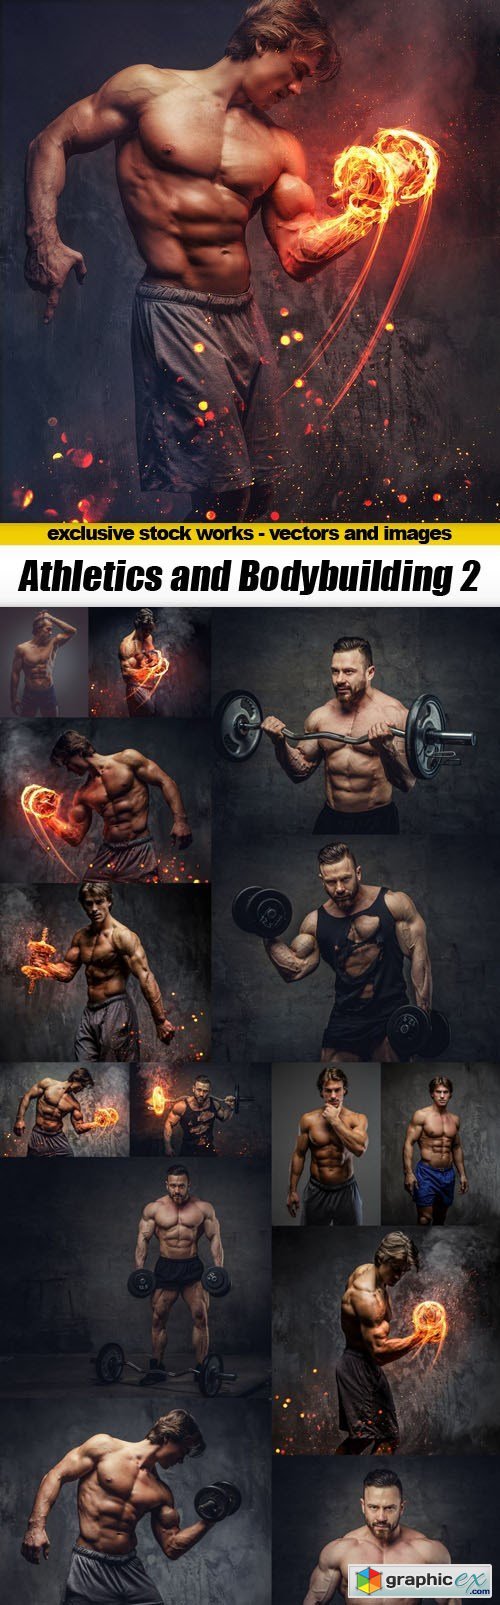 Athletics and Bodybuilding 2 - 15xUHQ JPEG